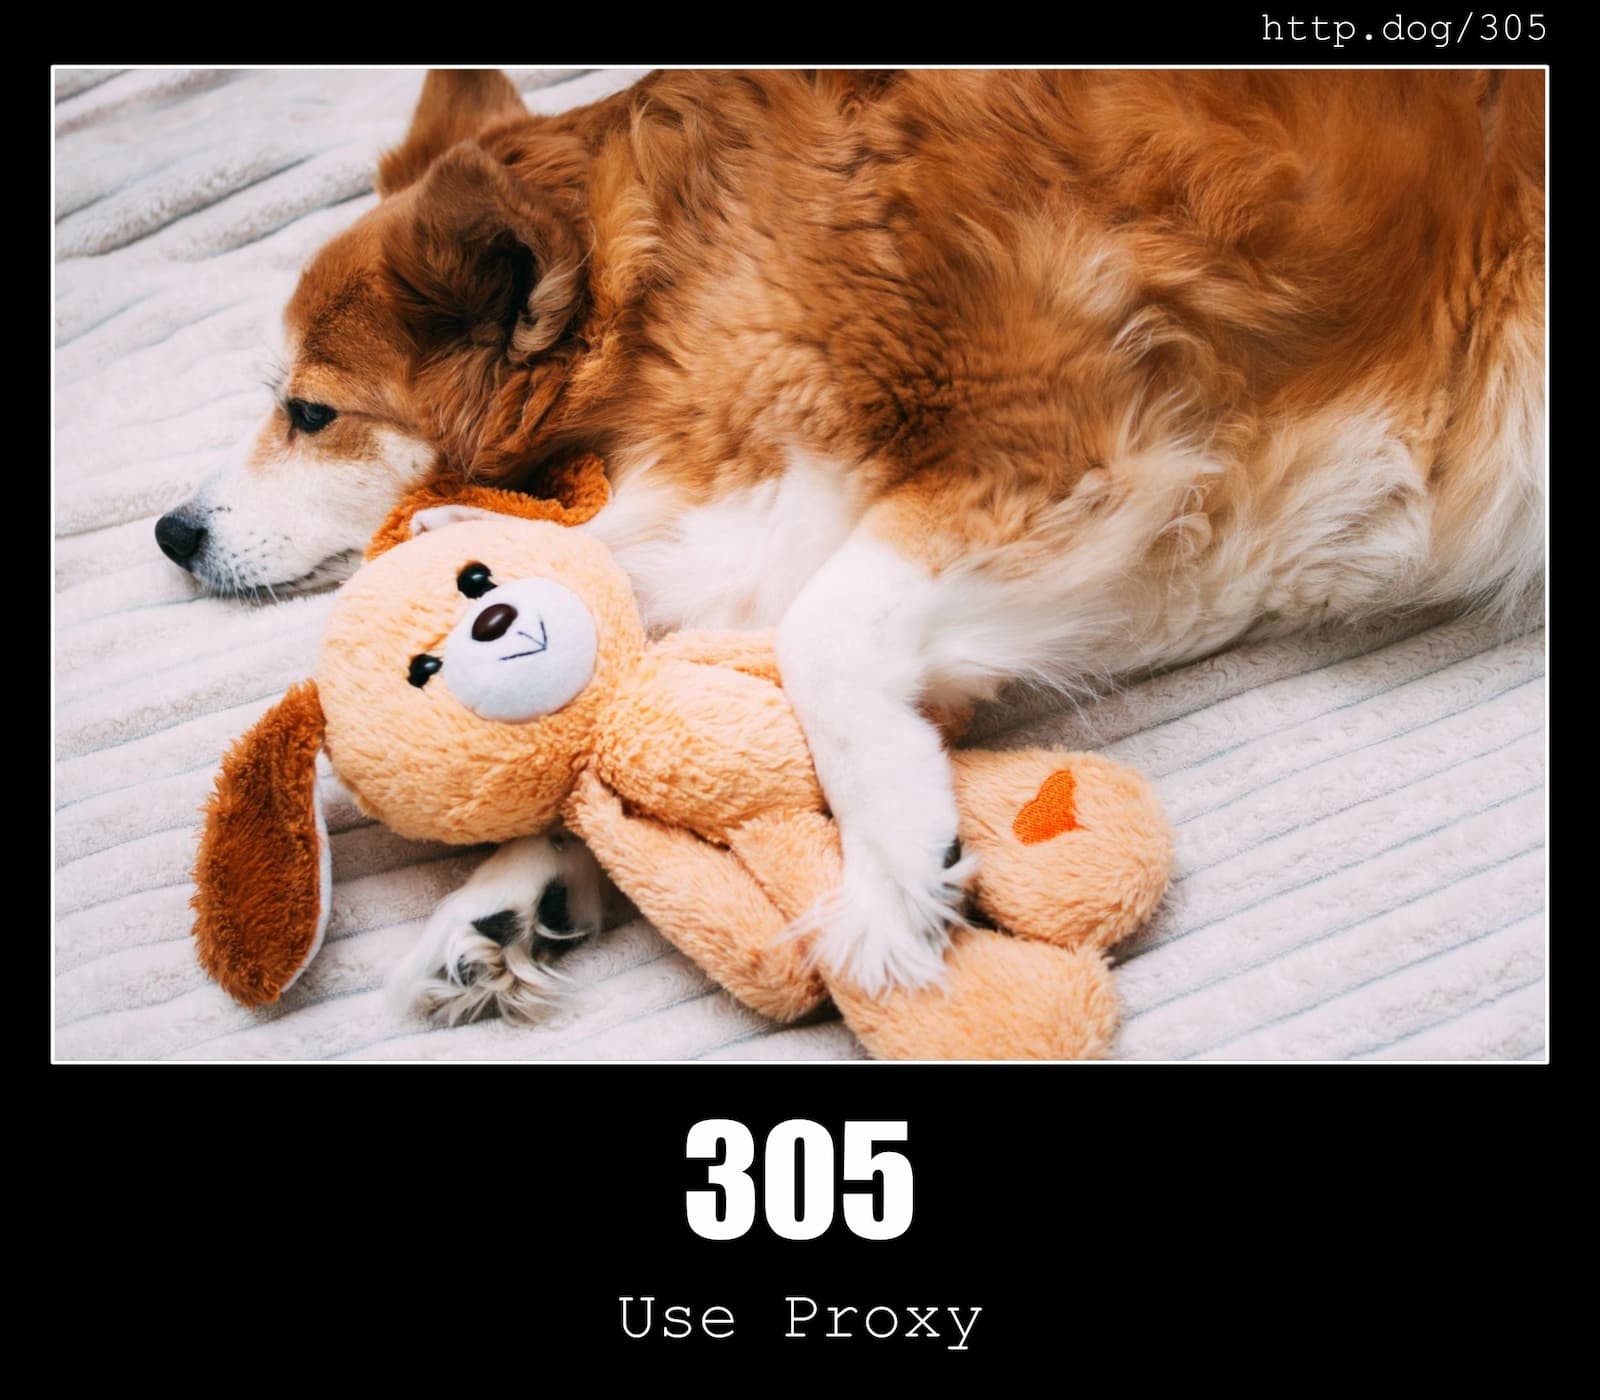 HTTP Status Code 305 Use Proxy